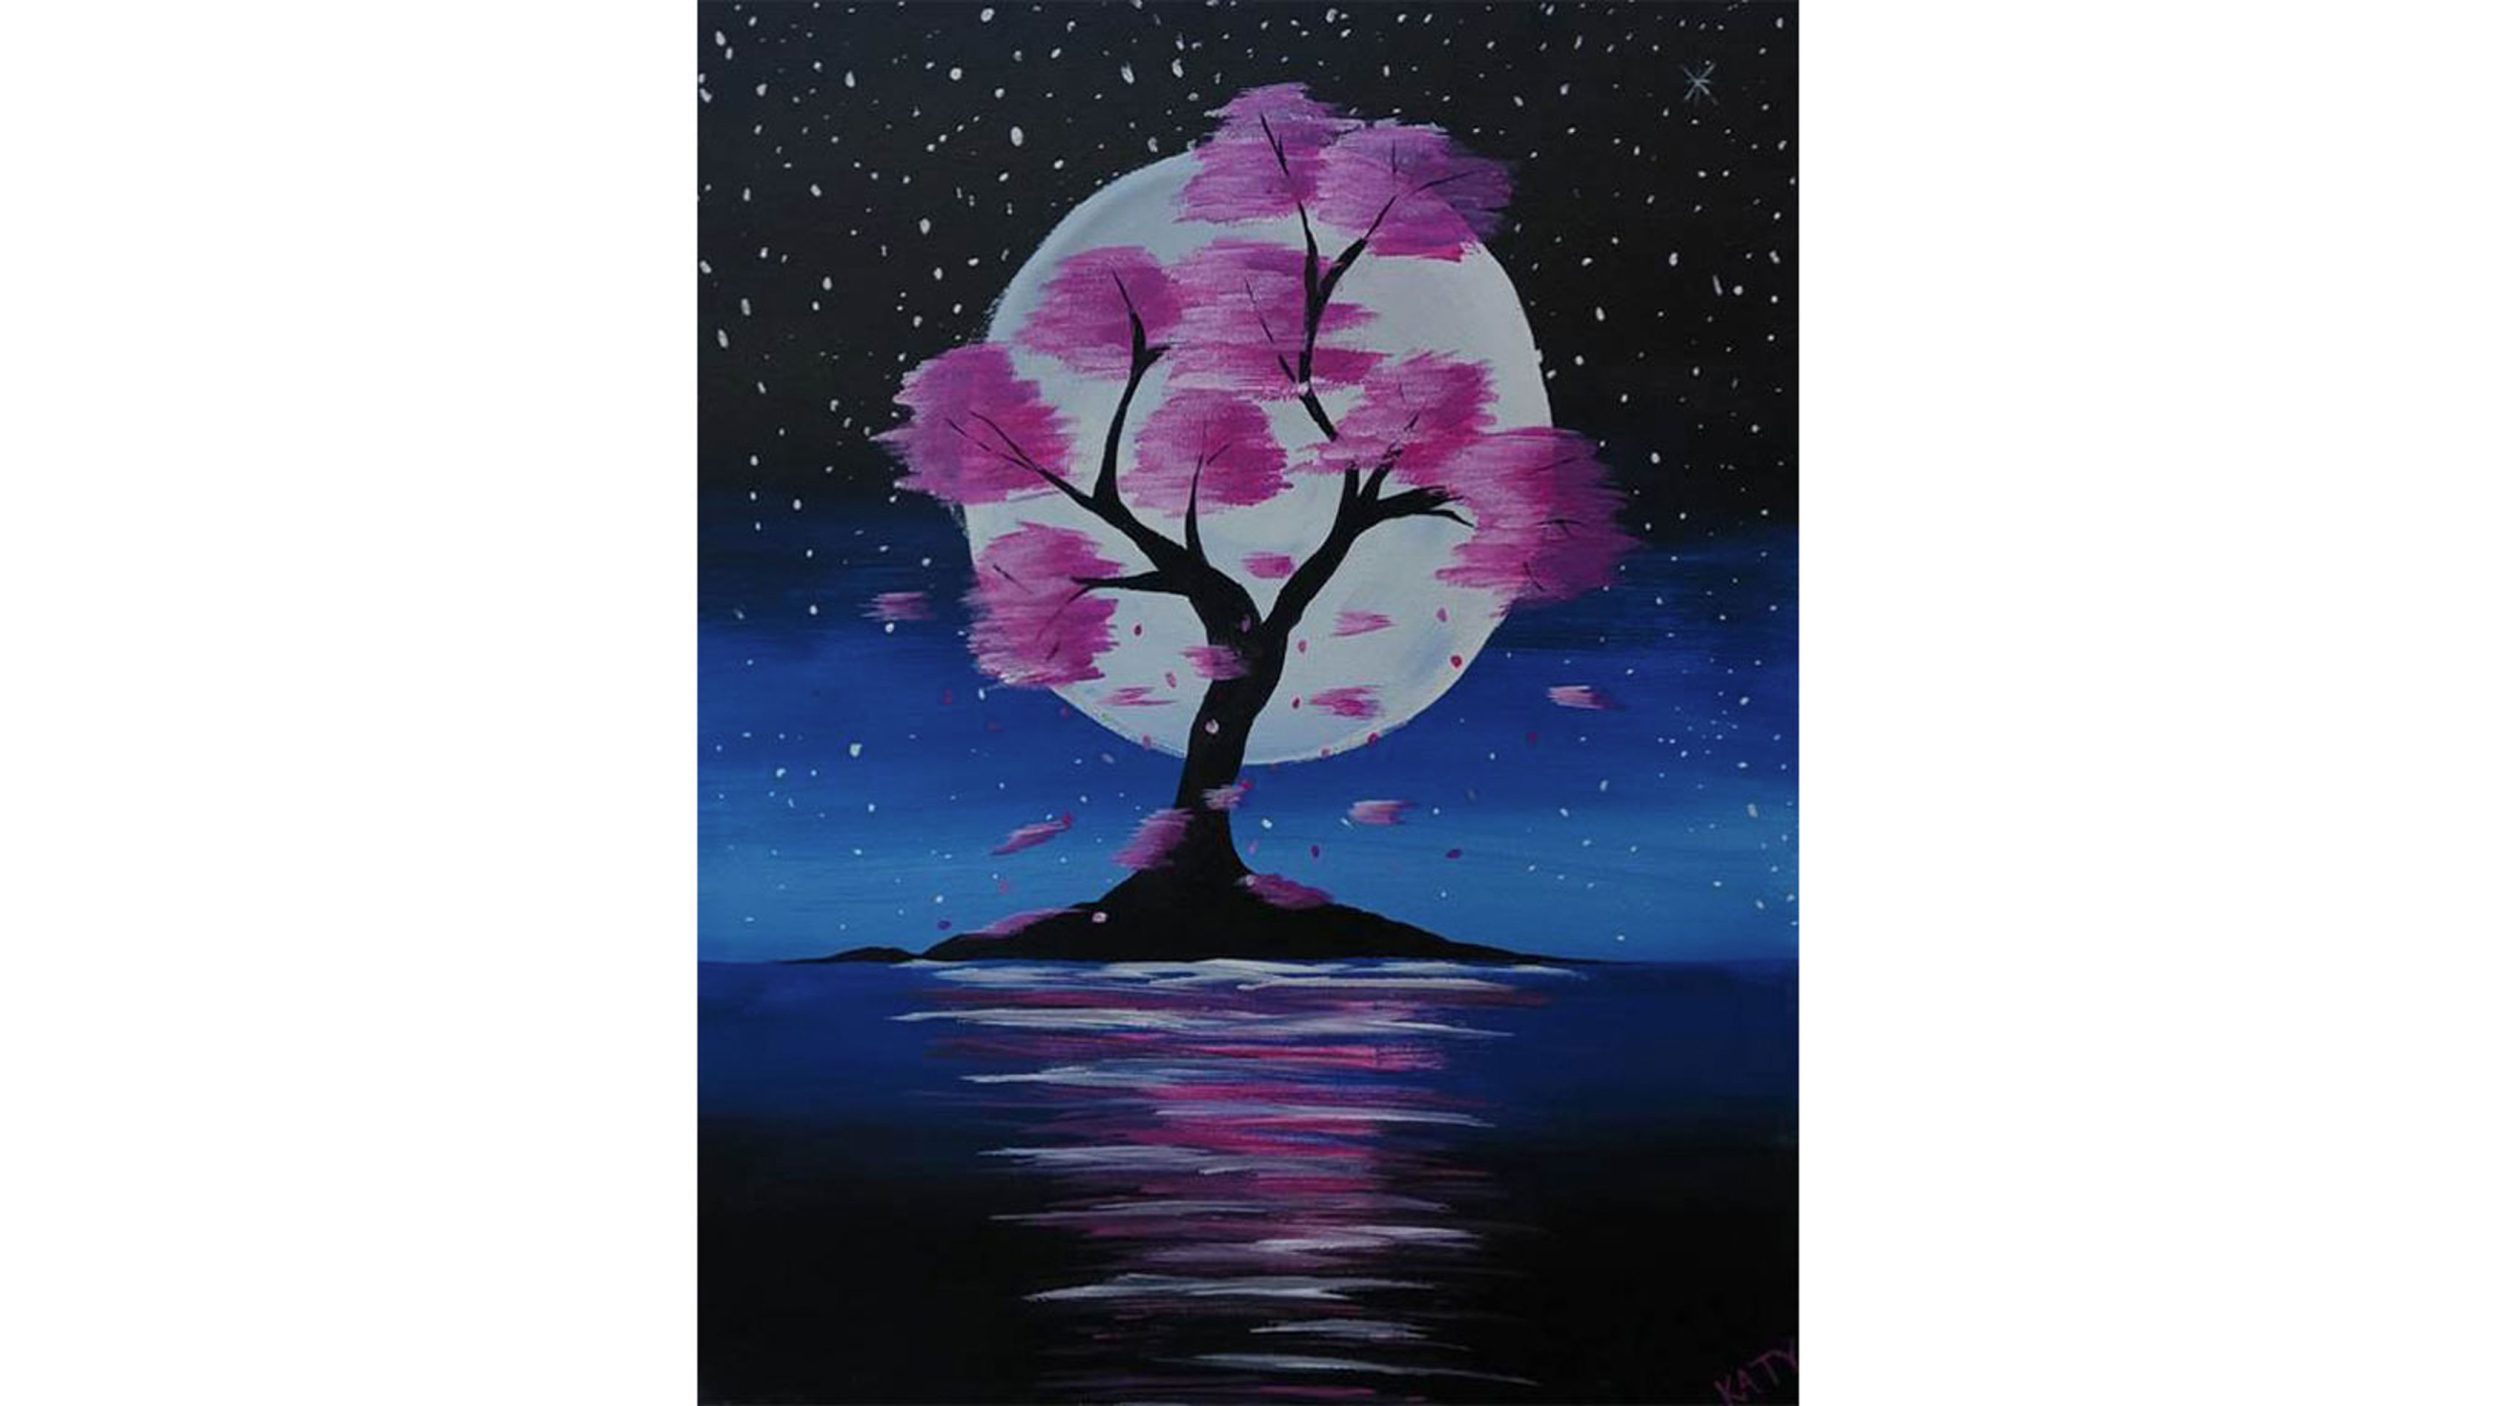 Cherry Blossom painting